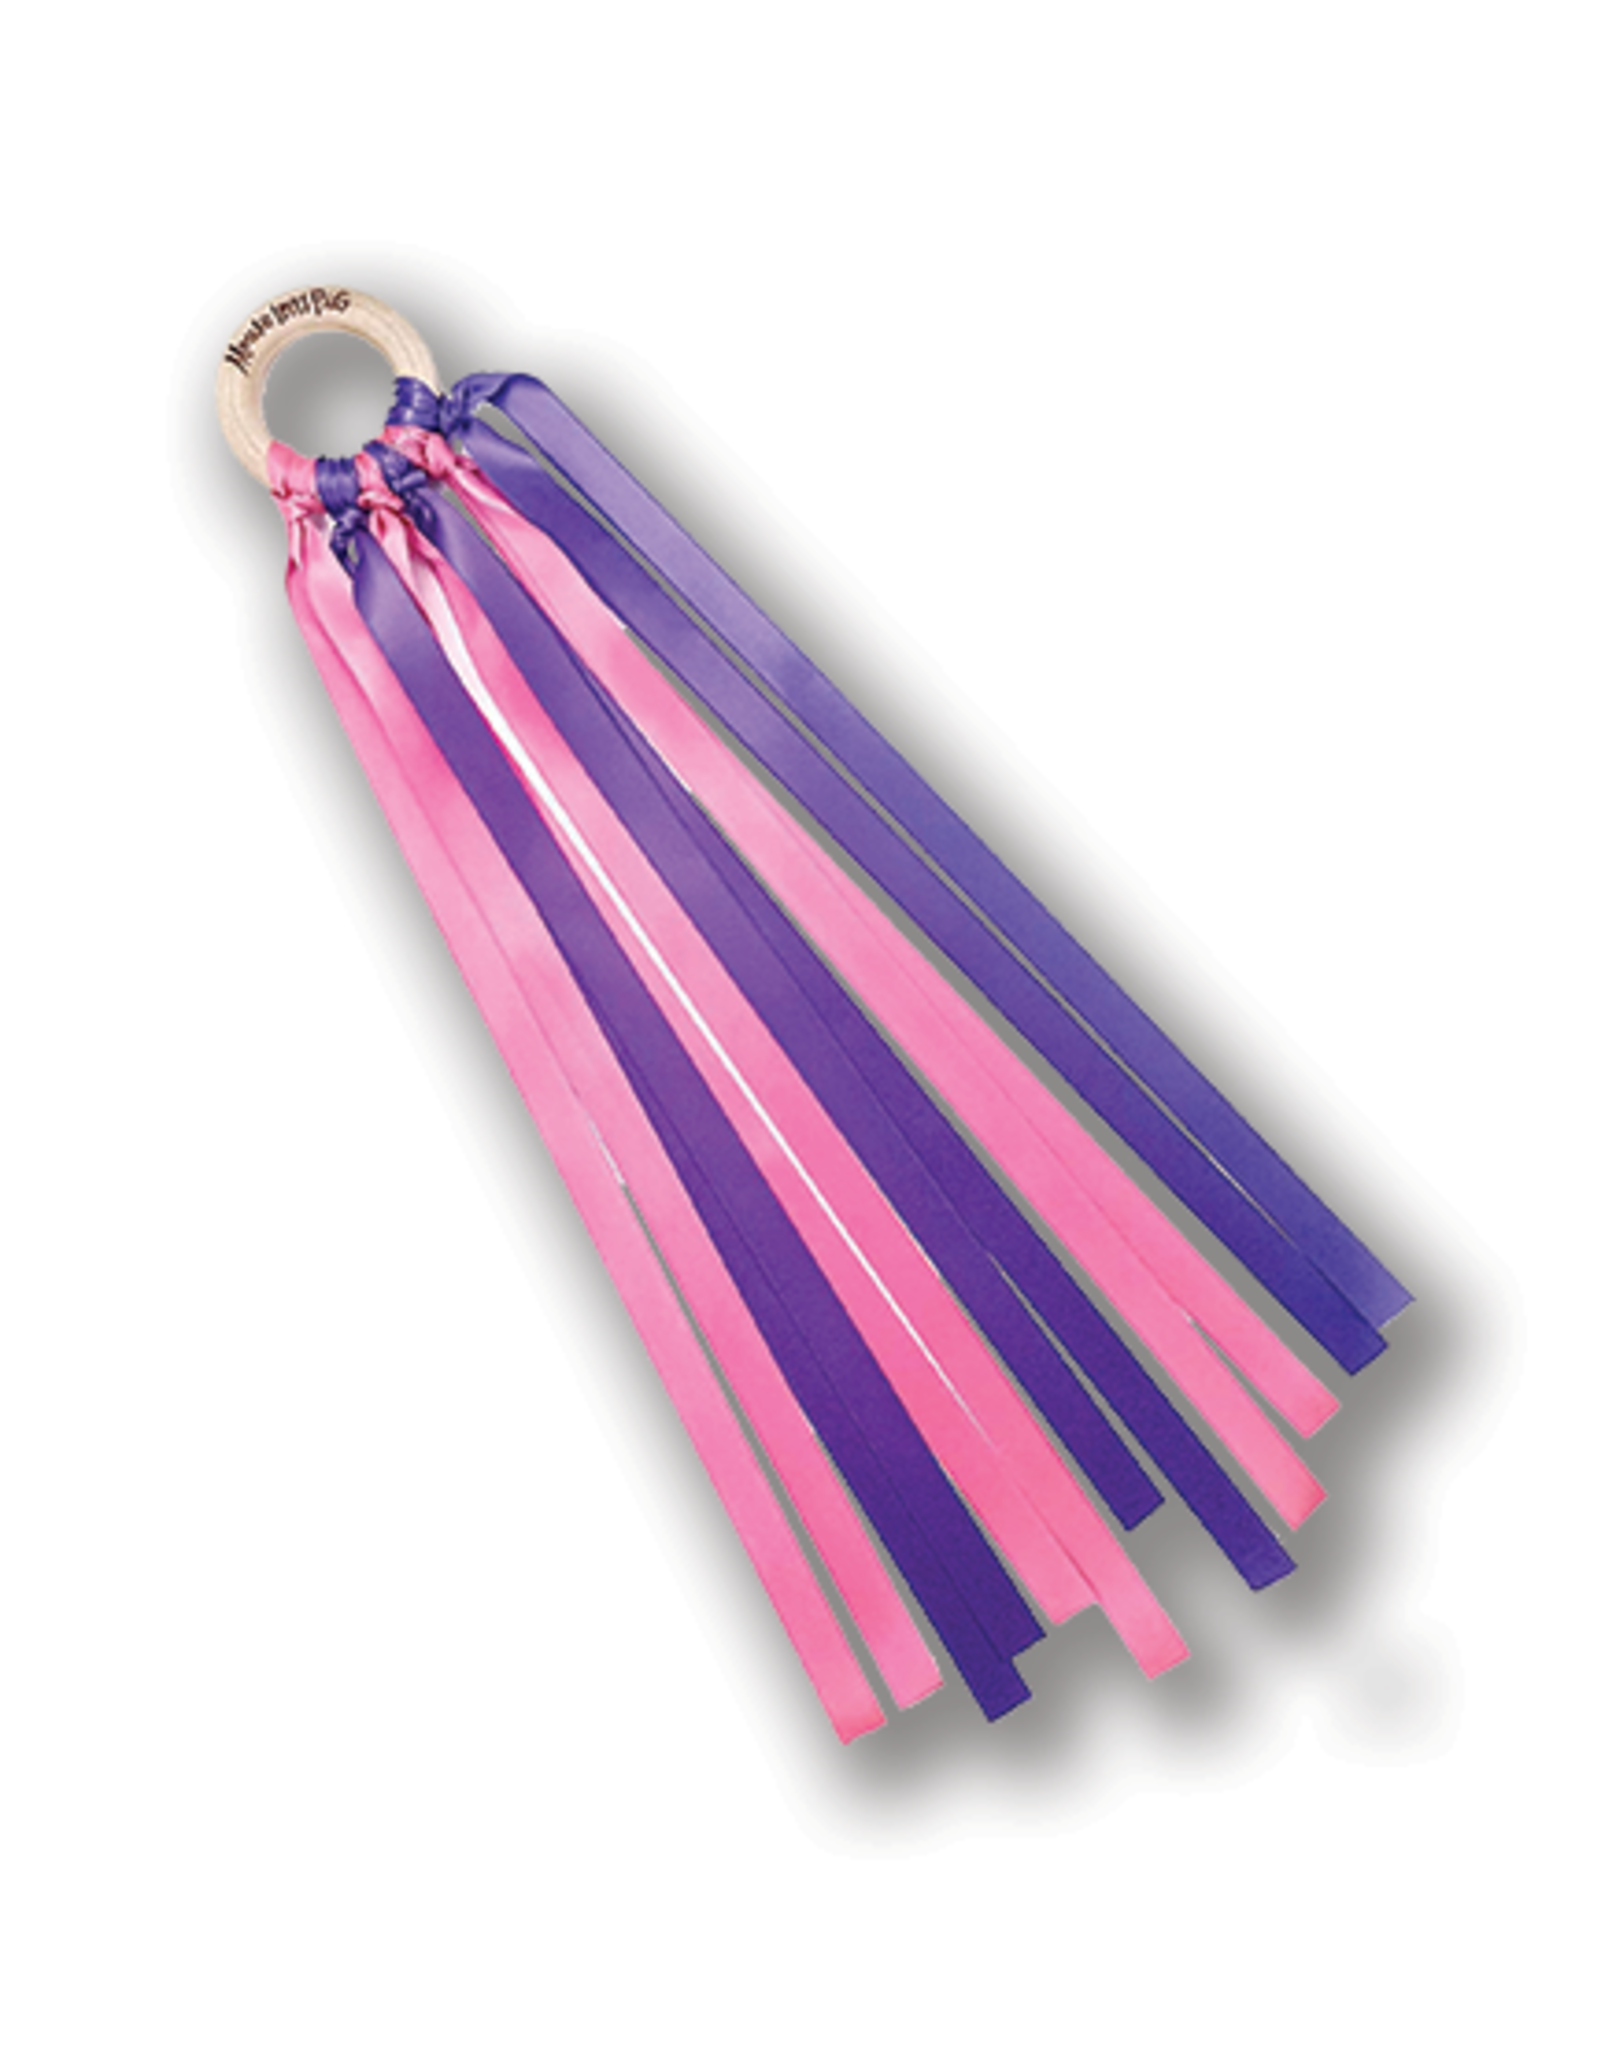 Ballerina Pink Purple Hand Kite